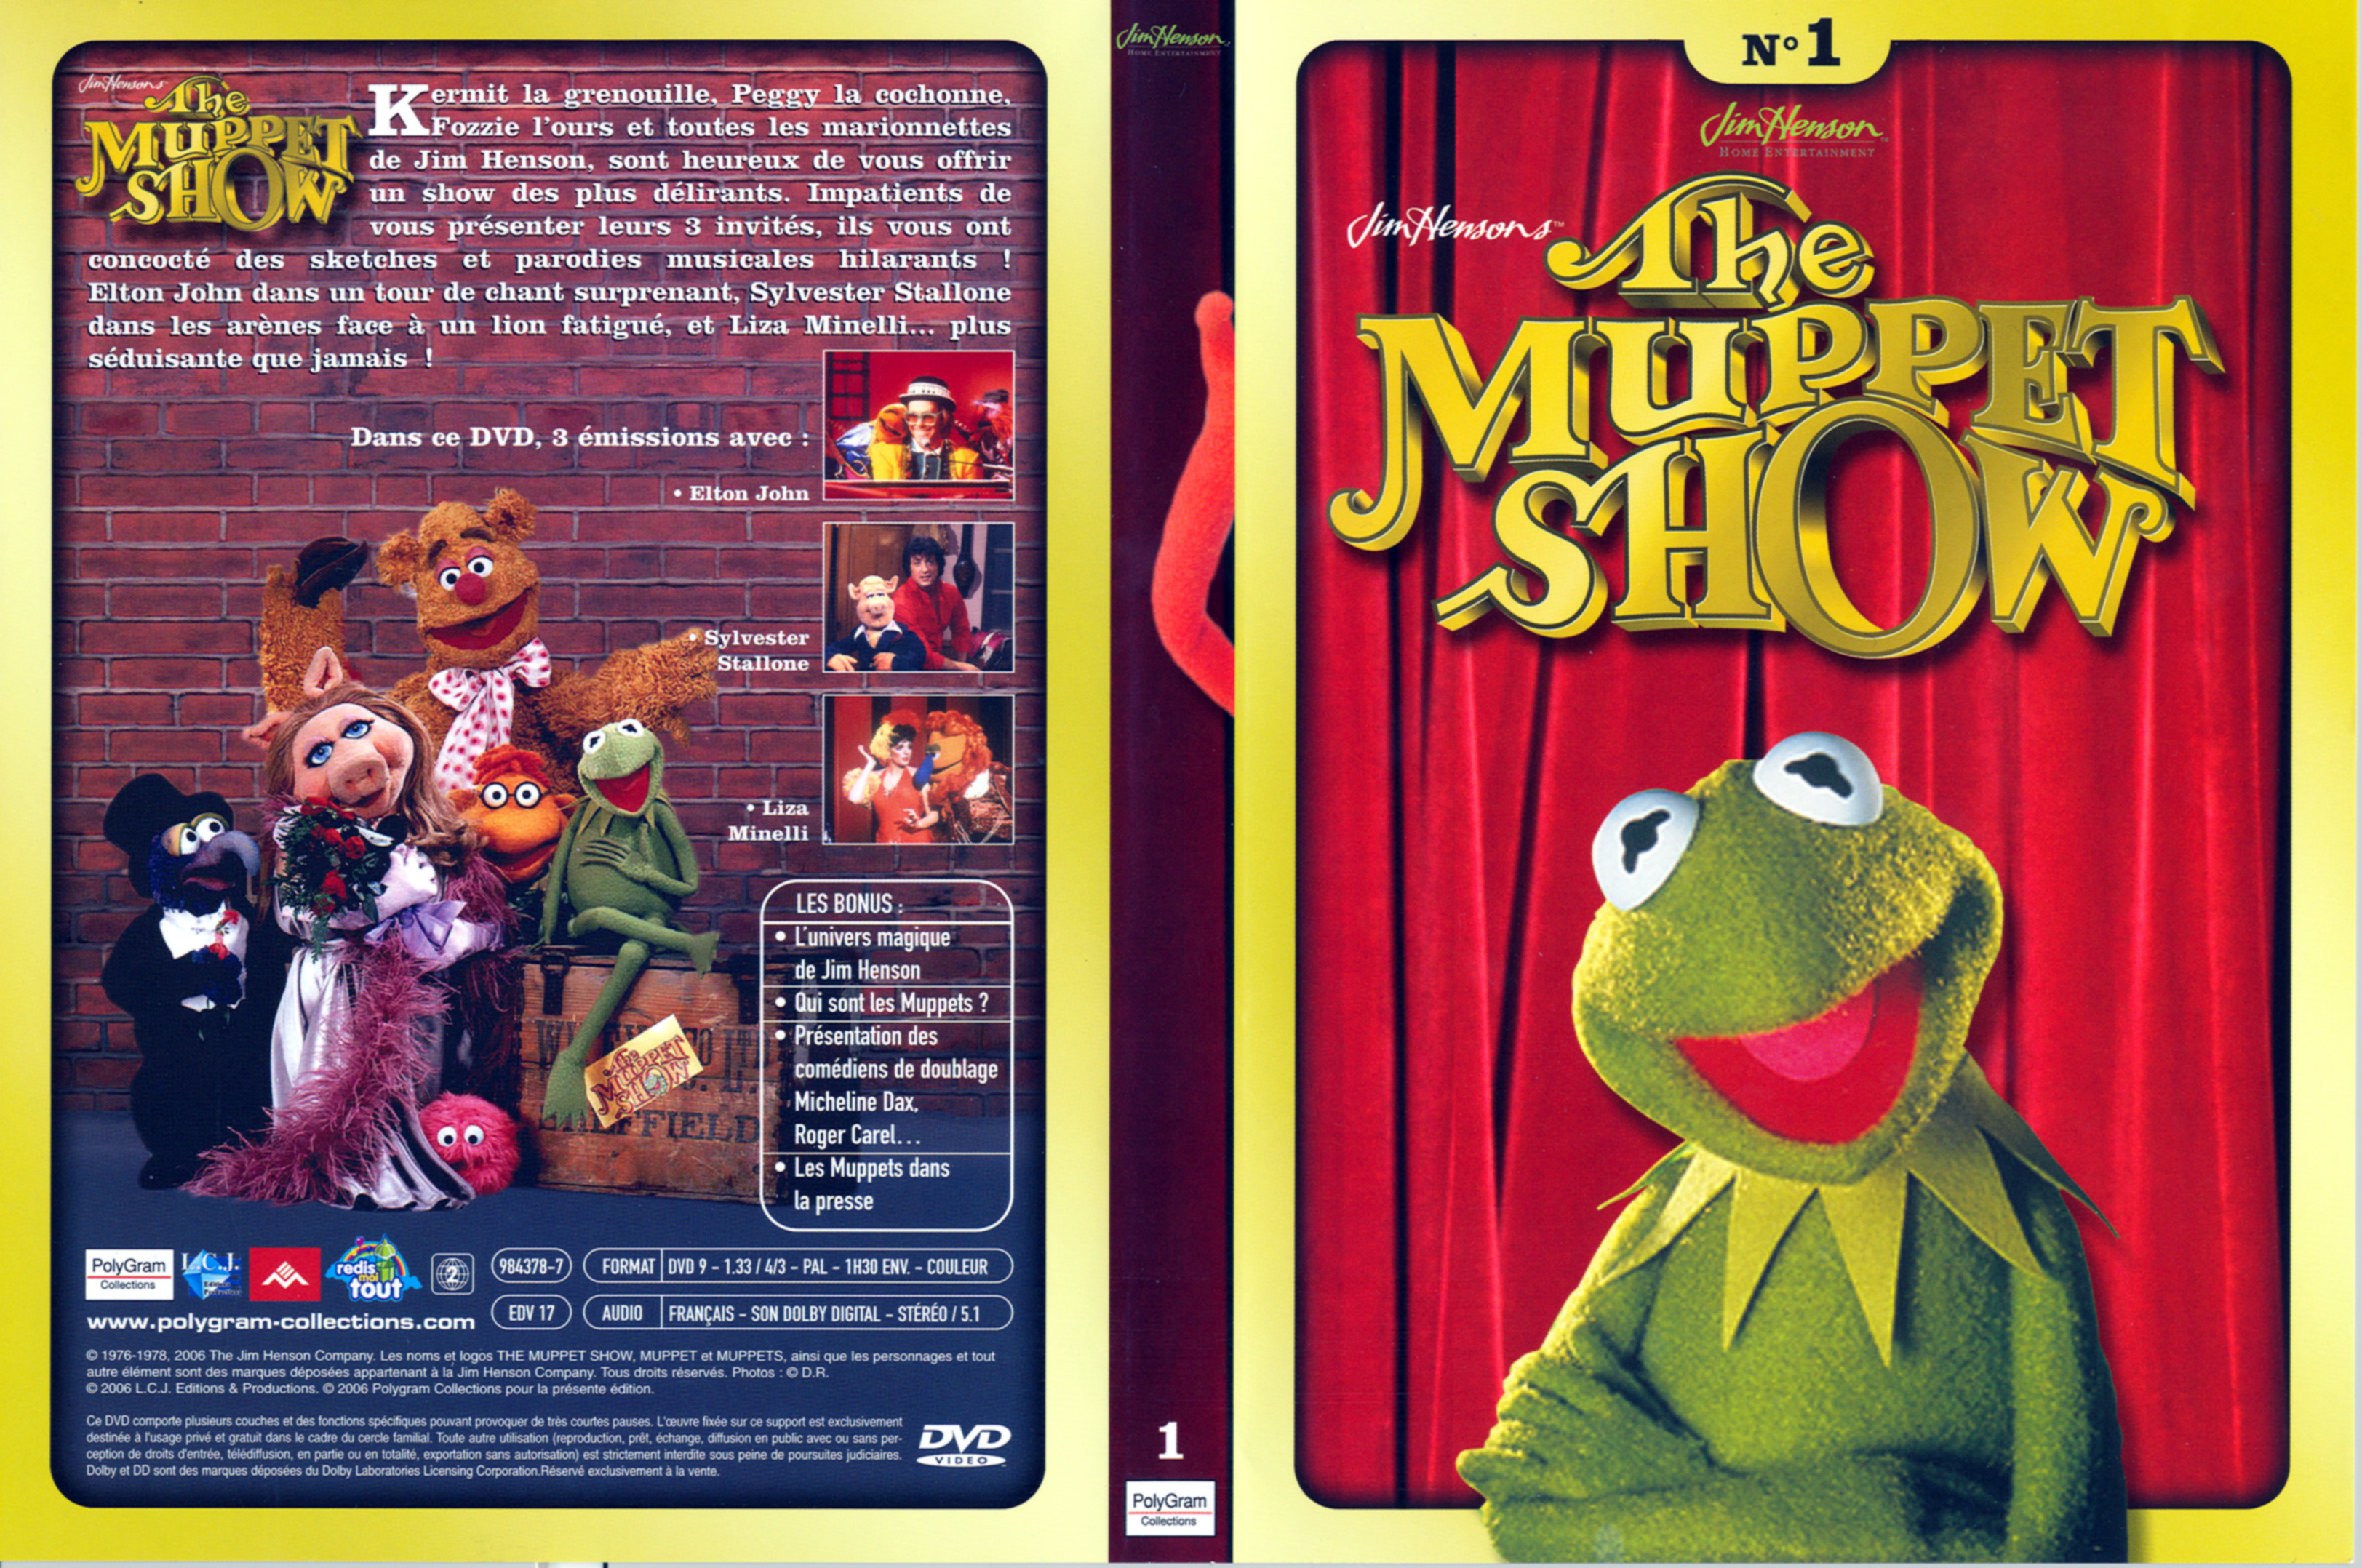 Jaquette DVD The muppet show vol 1